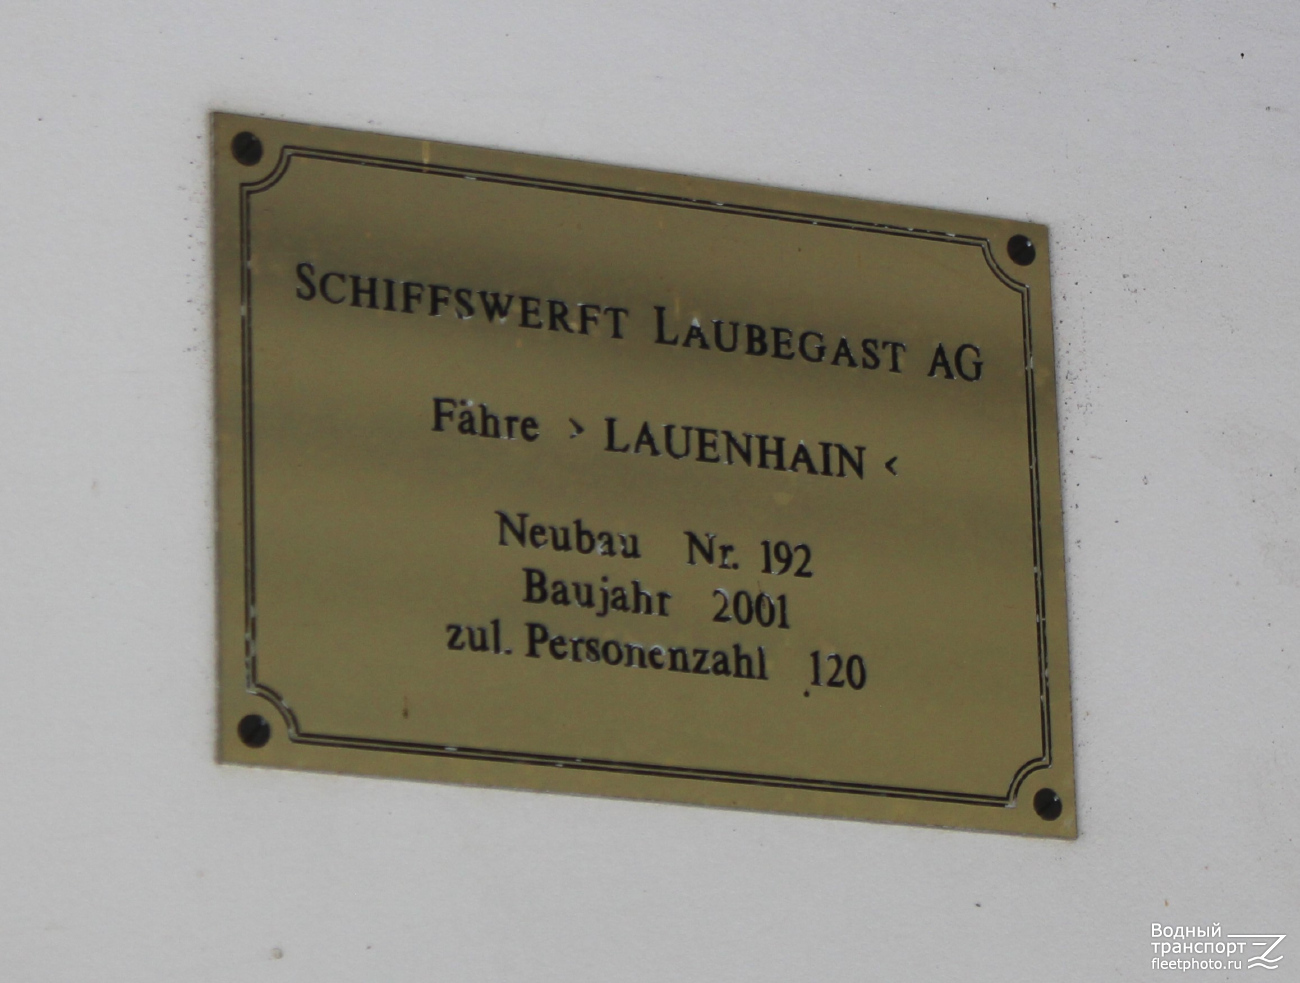 Lauenhain. Shipbuilder's Makers Plates